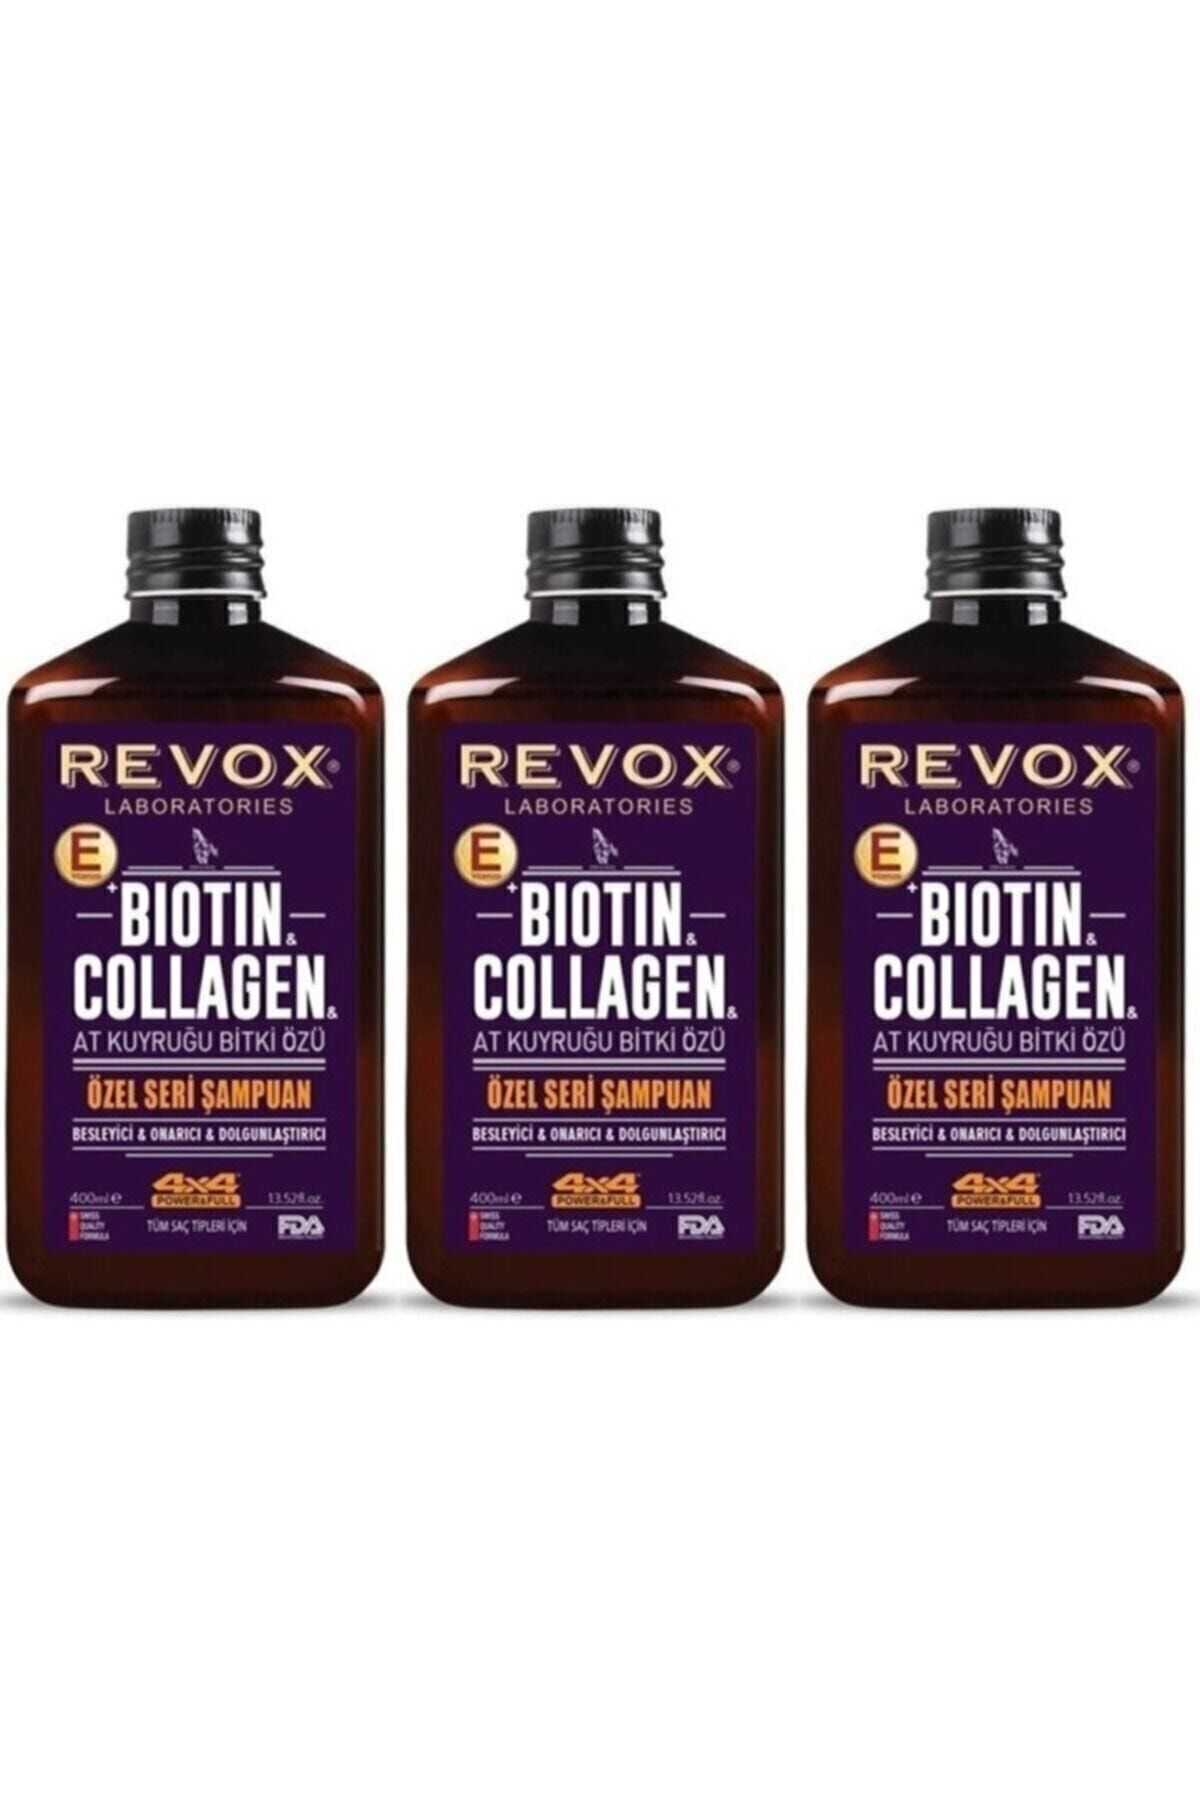 Revox At Kuyruğu Biotin Collagen Şampuan 400 ml 3 Adet